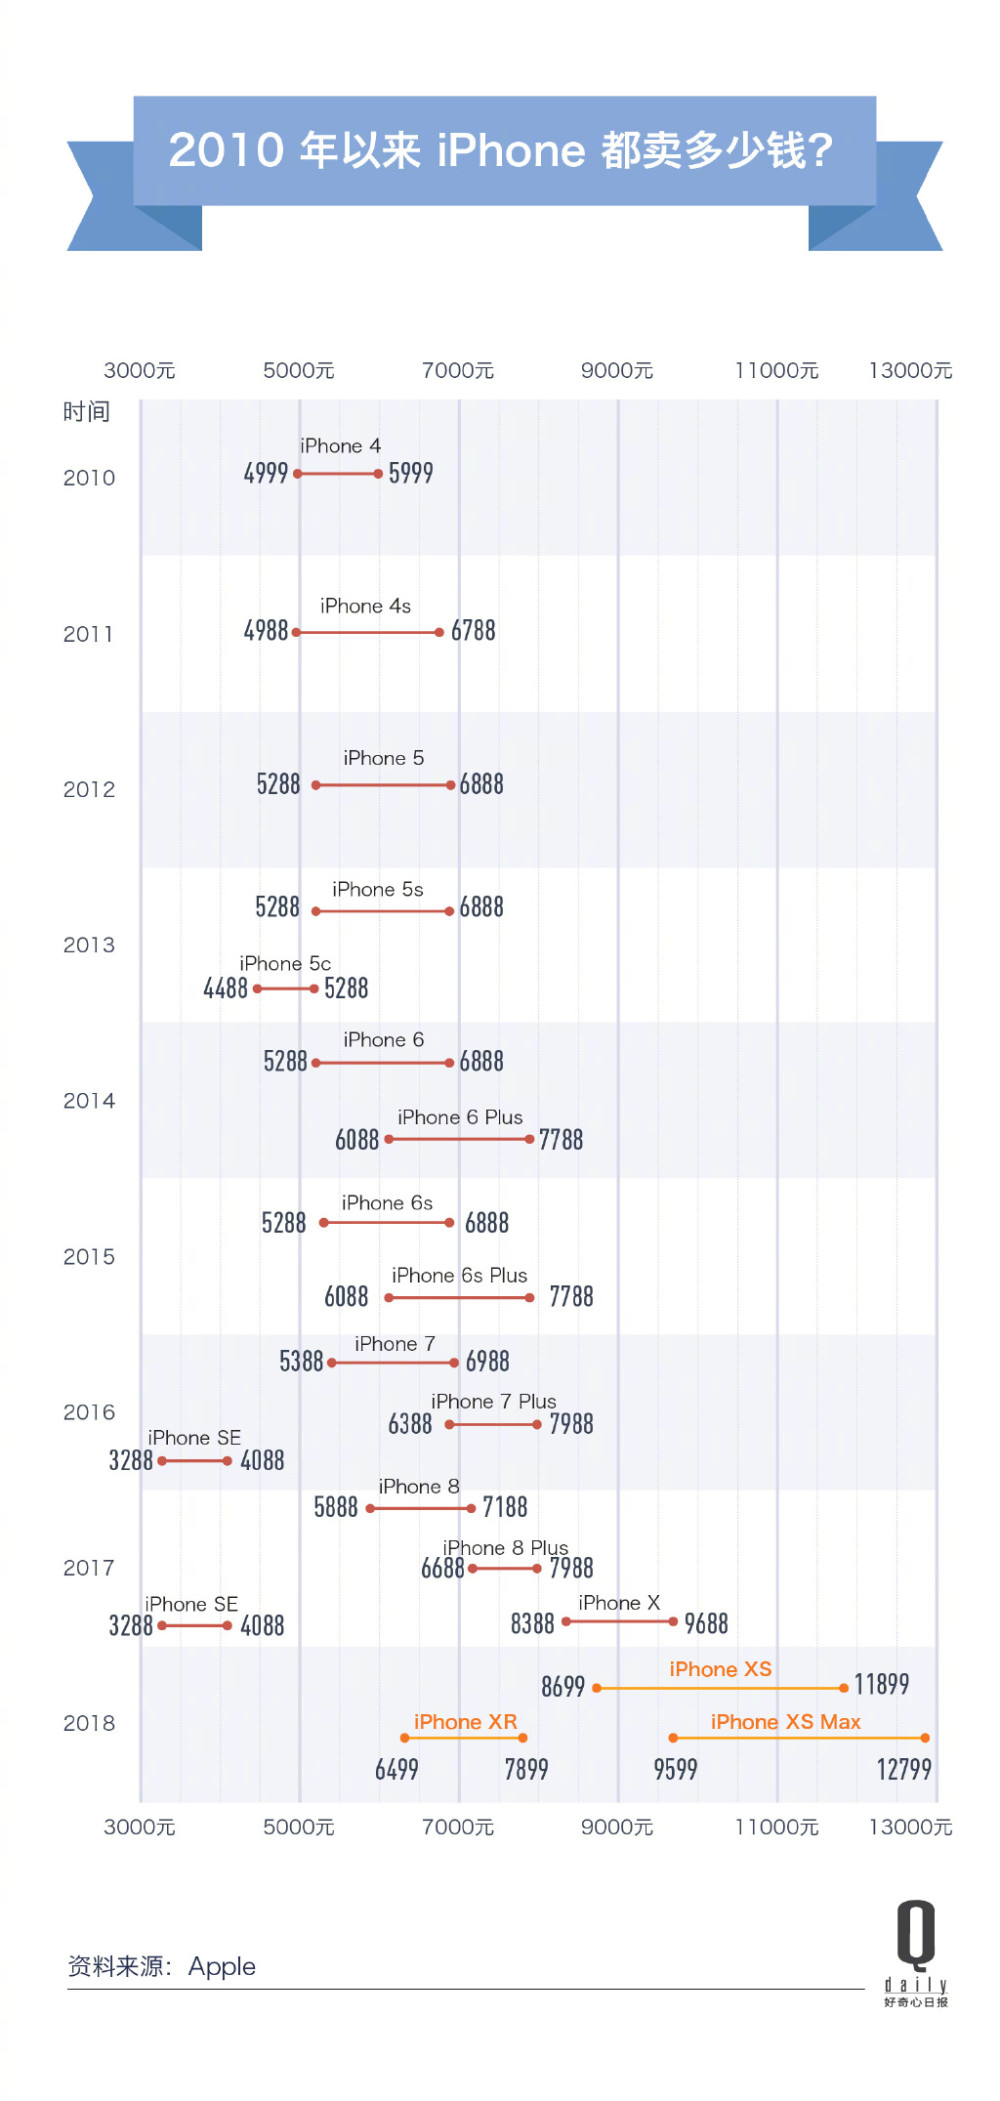 iPhoneXS售价很贵?苹果回应:它值12799元这